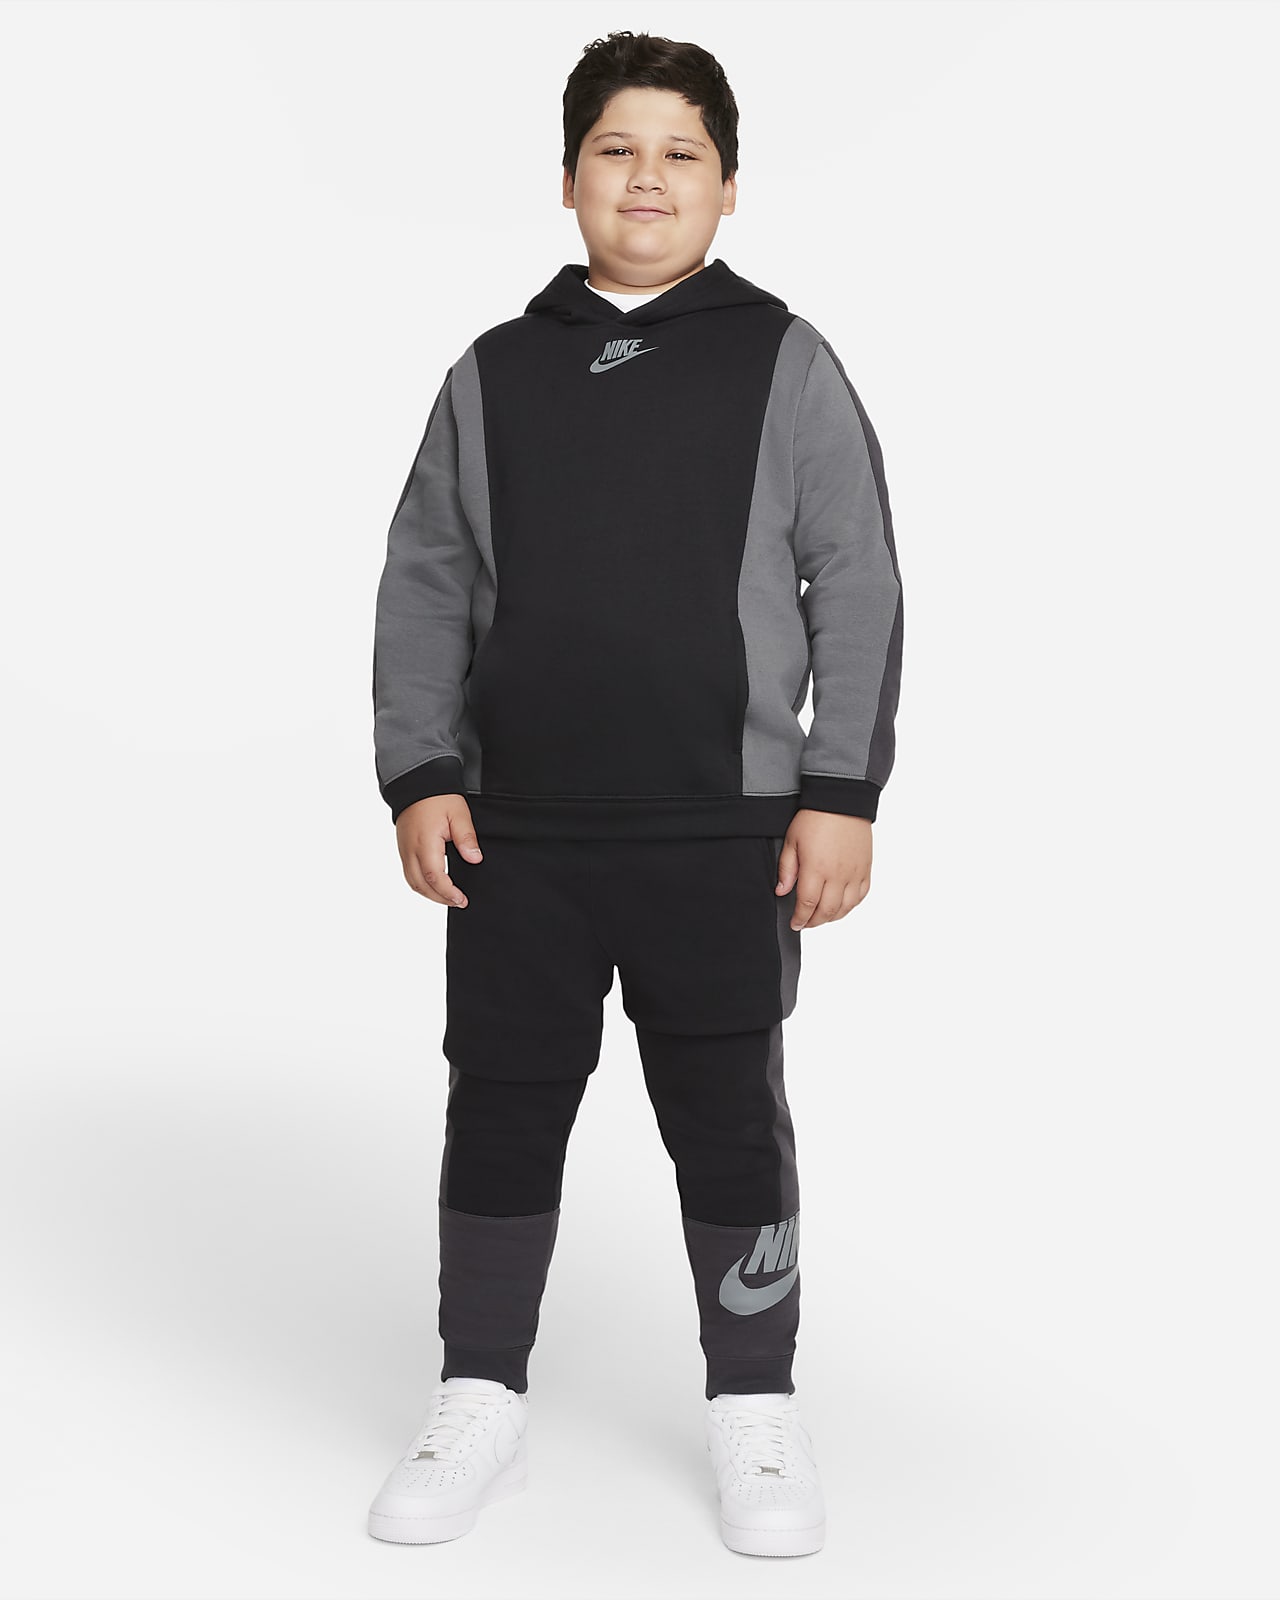 Sudadera con gorro sin cierre niños talla grande (talla extendida) Nike Sportswear Amplify. Nike.com